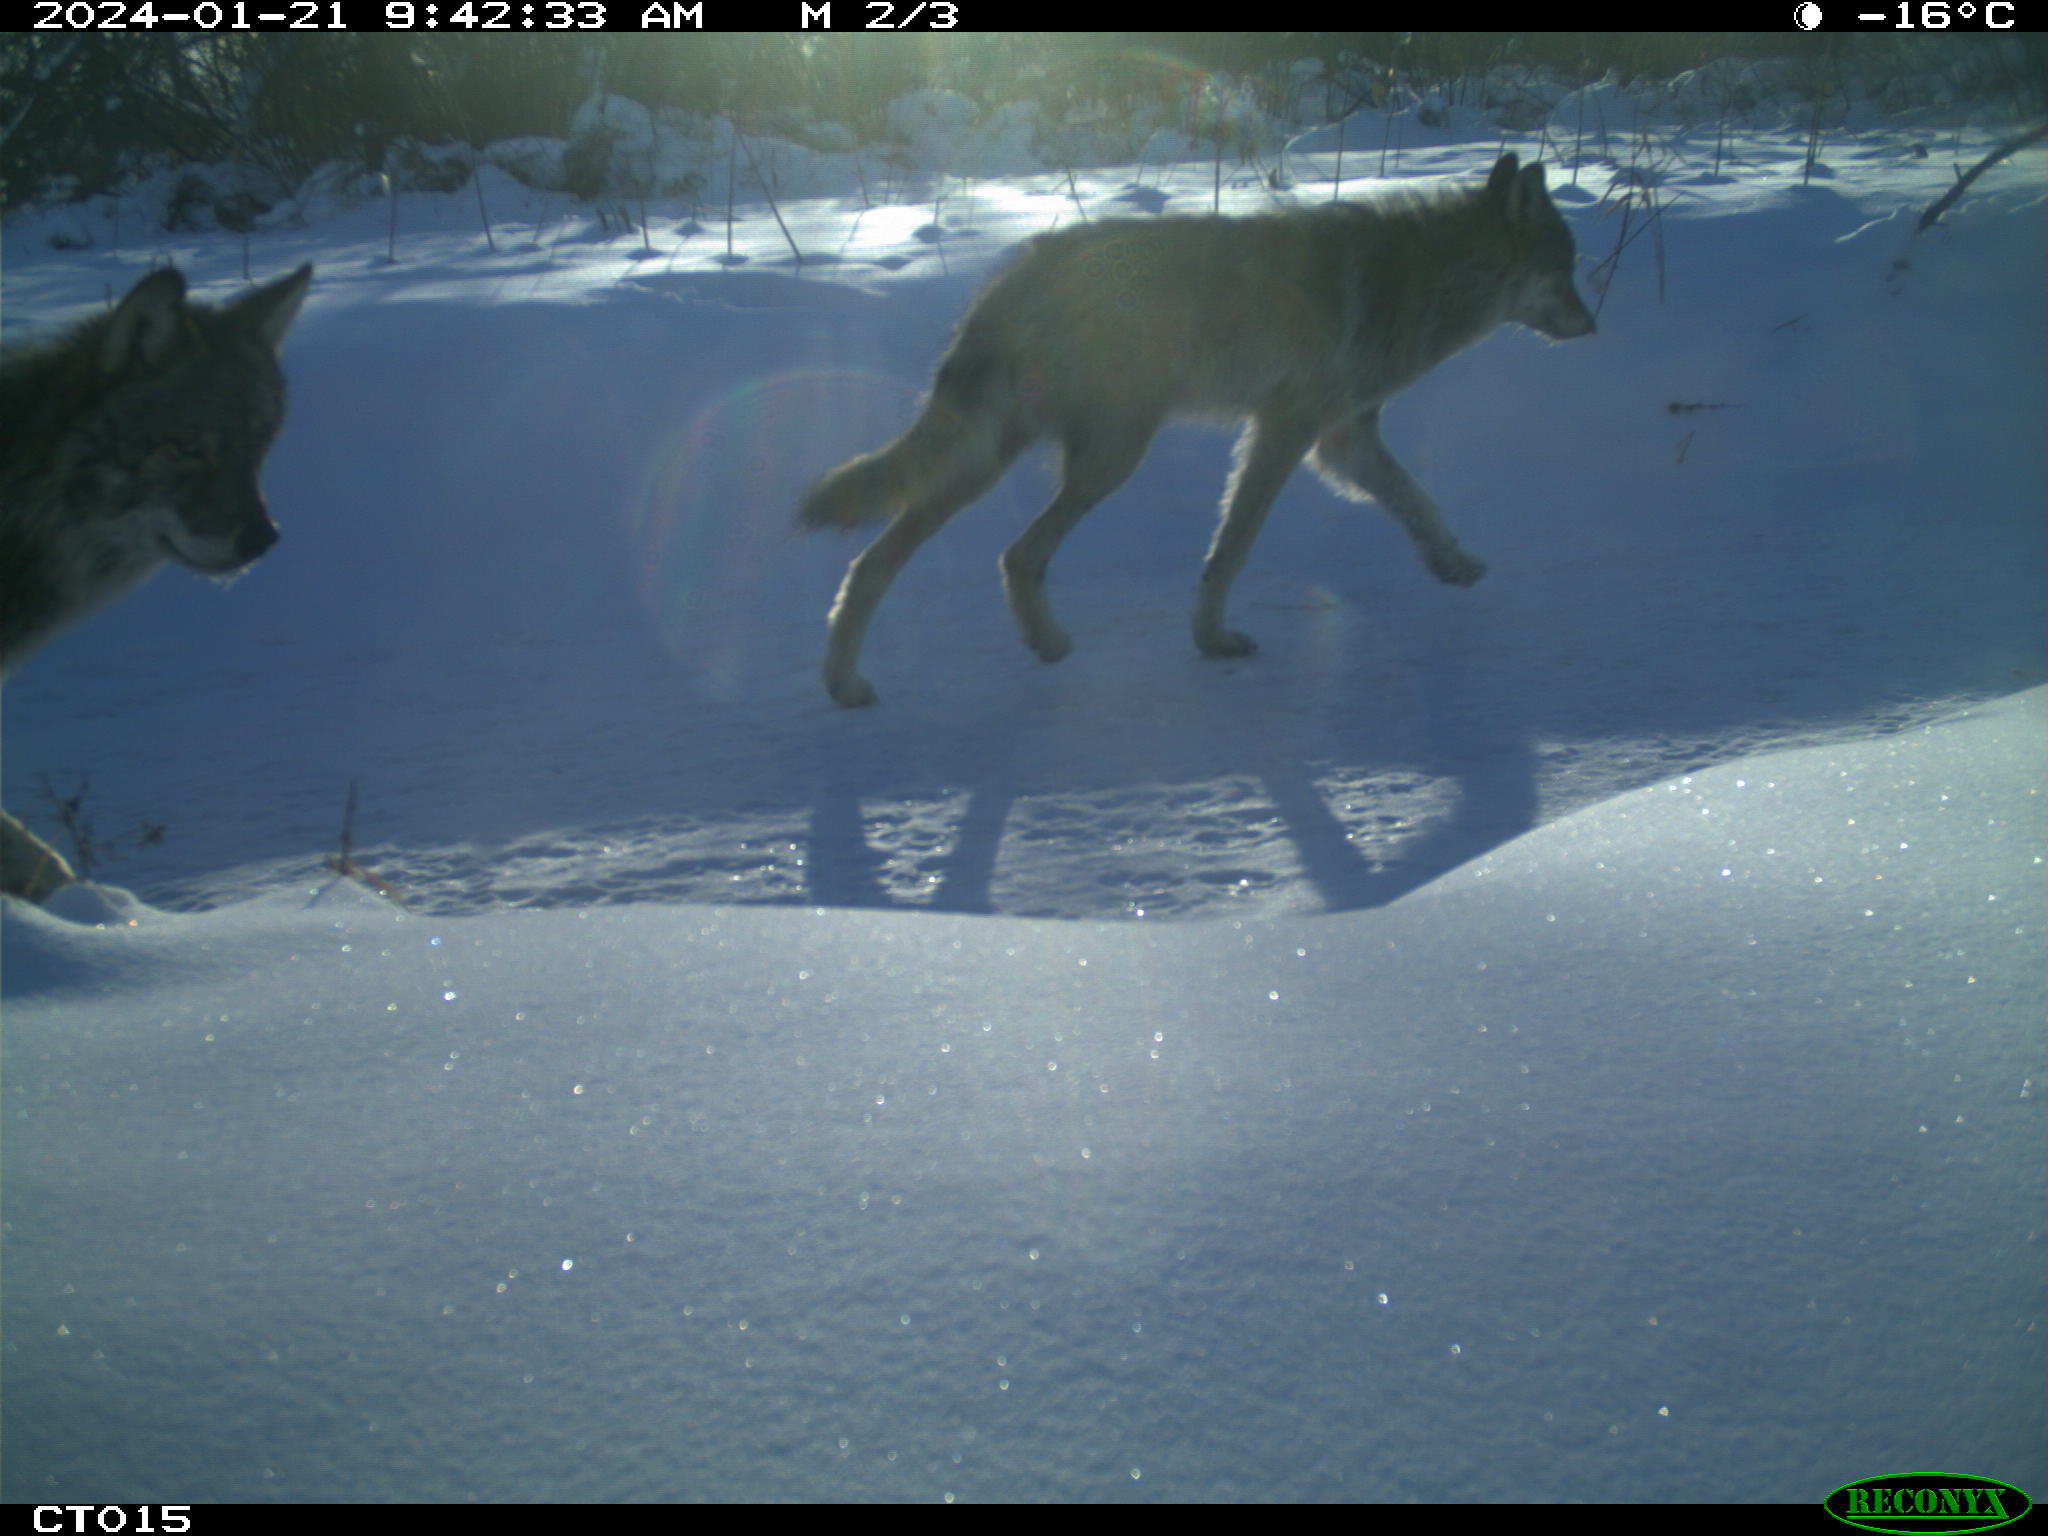 Two wolves walking through snow